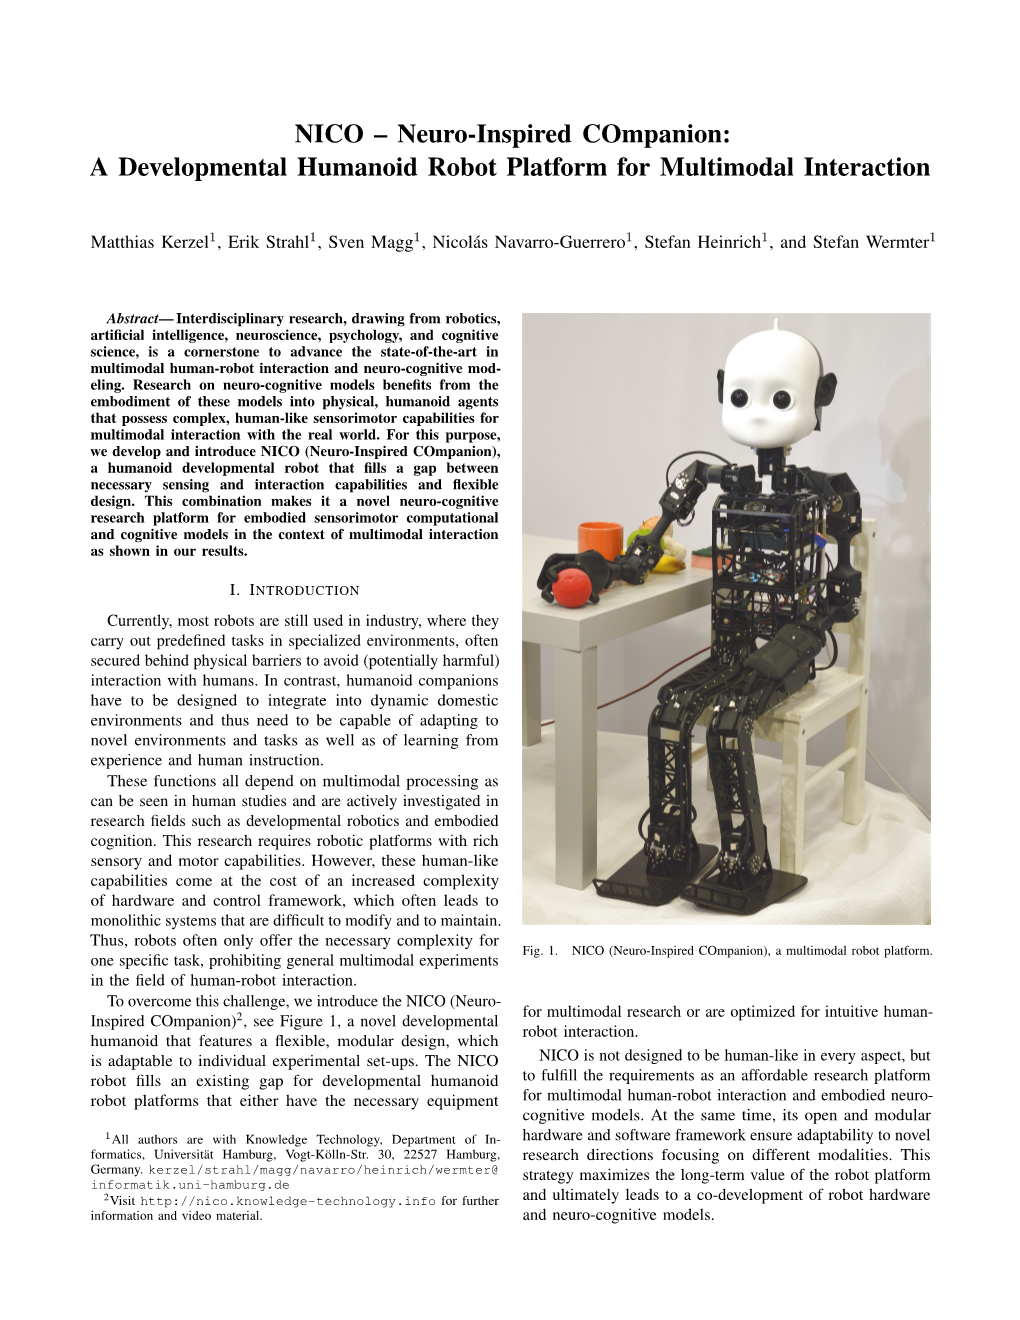 A Developmental Humanoid Robot Platform for Multimodal Interaction